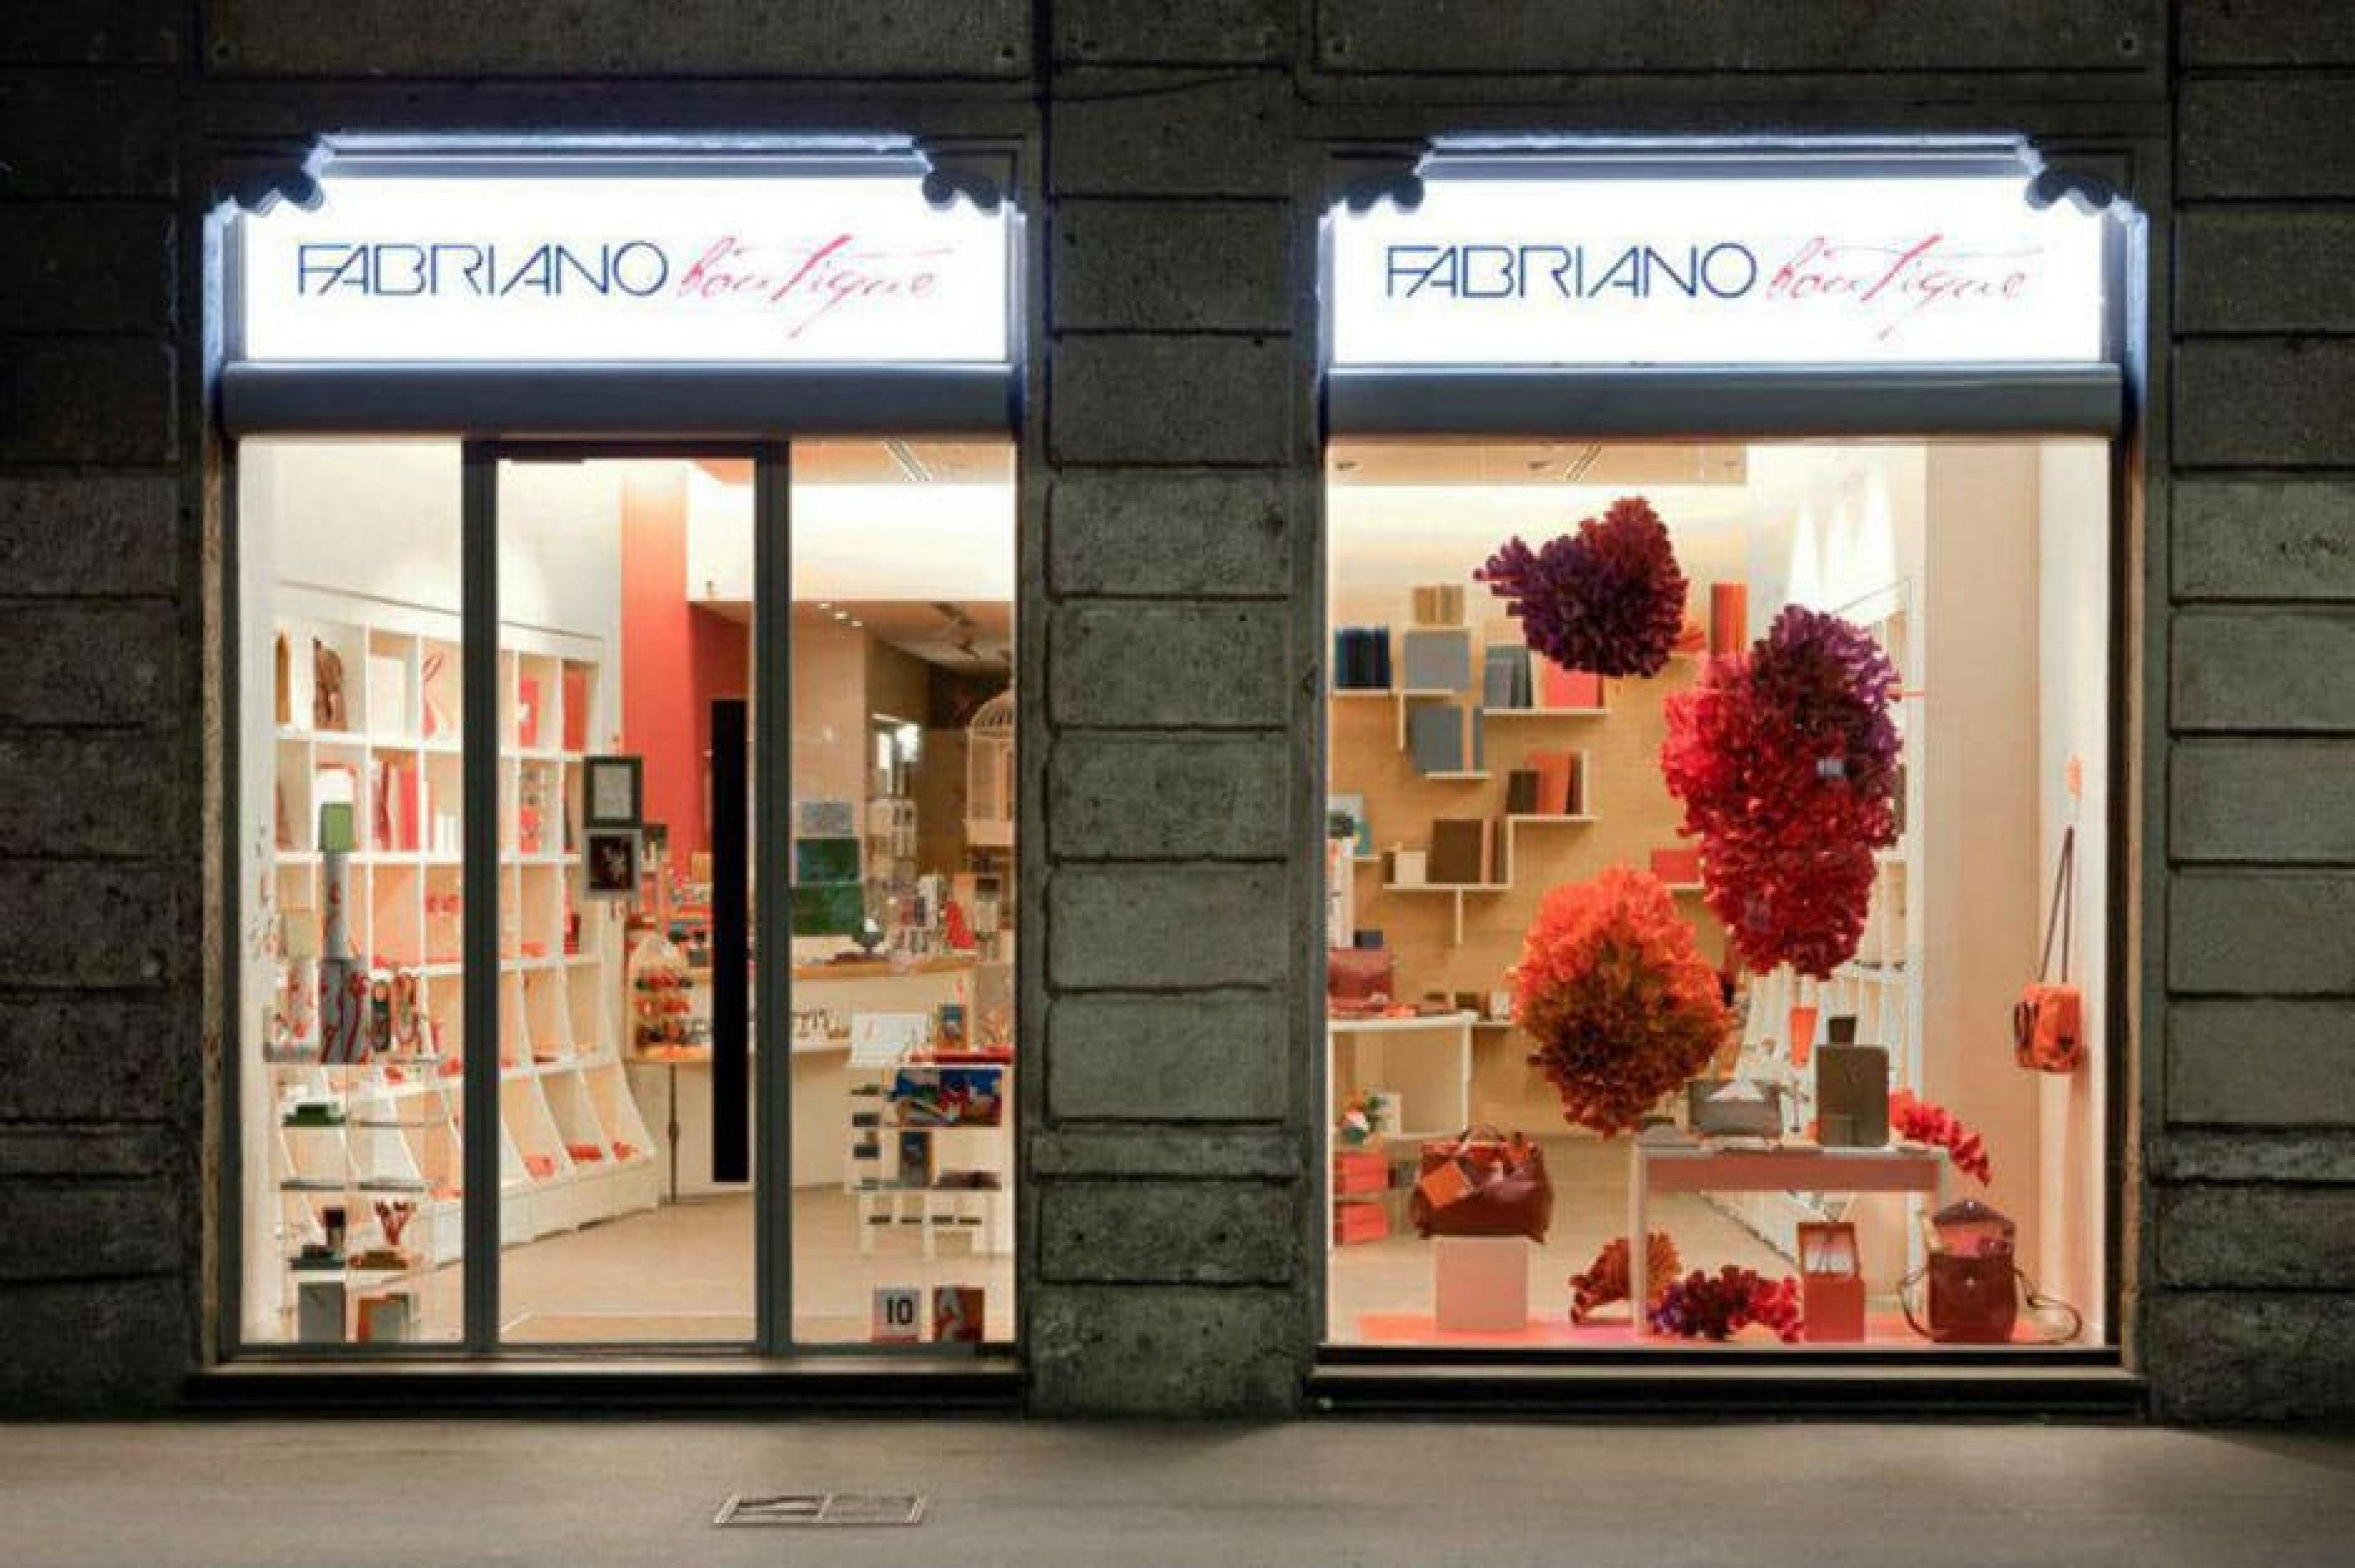 Exterior at Fabriano Boutique,Milan, Italy - courtesy Fabriano Boutique